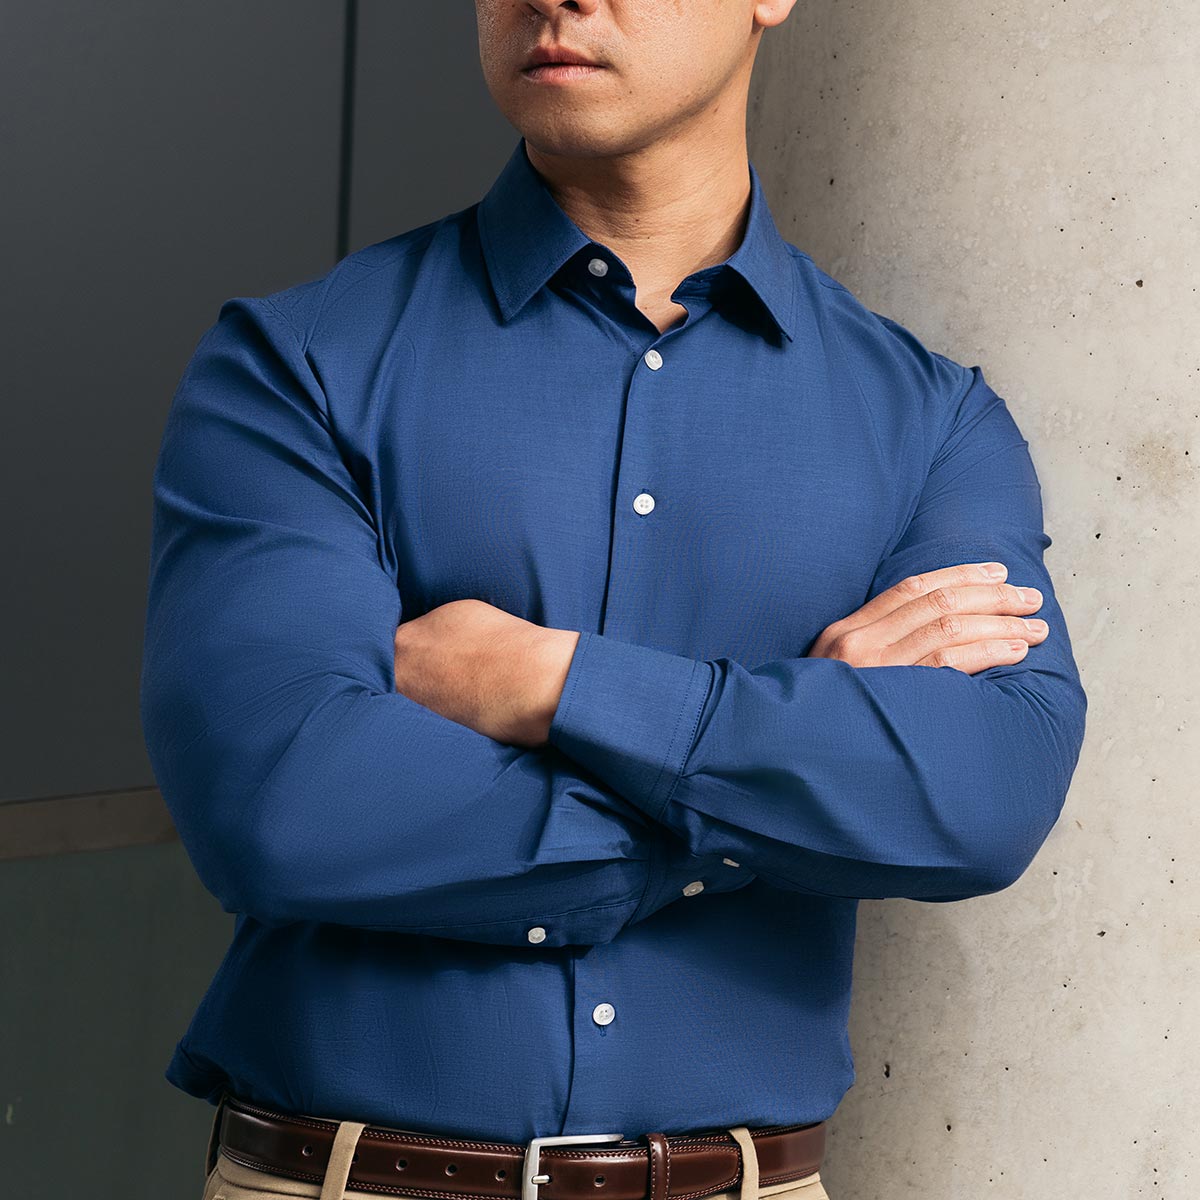 navy blue collar shirt on man wearing chino pants and brown belt